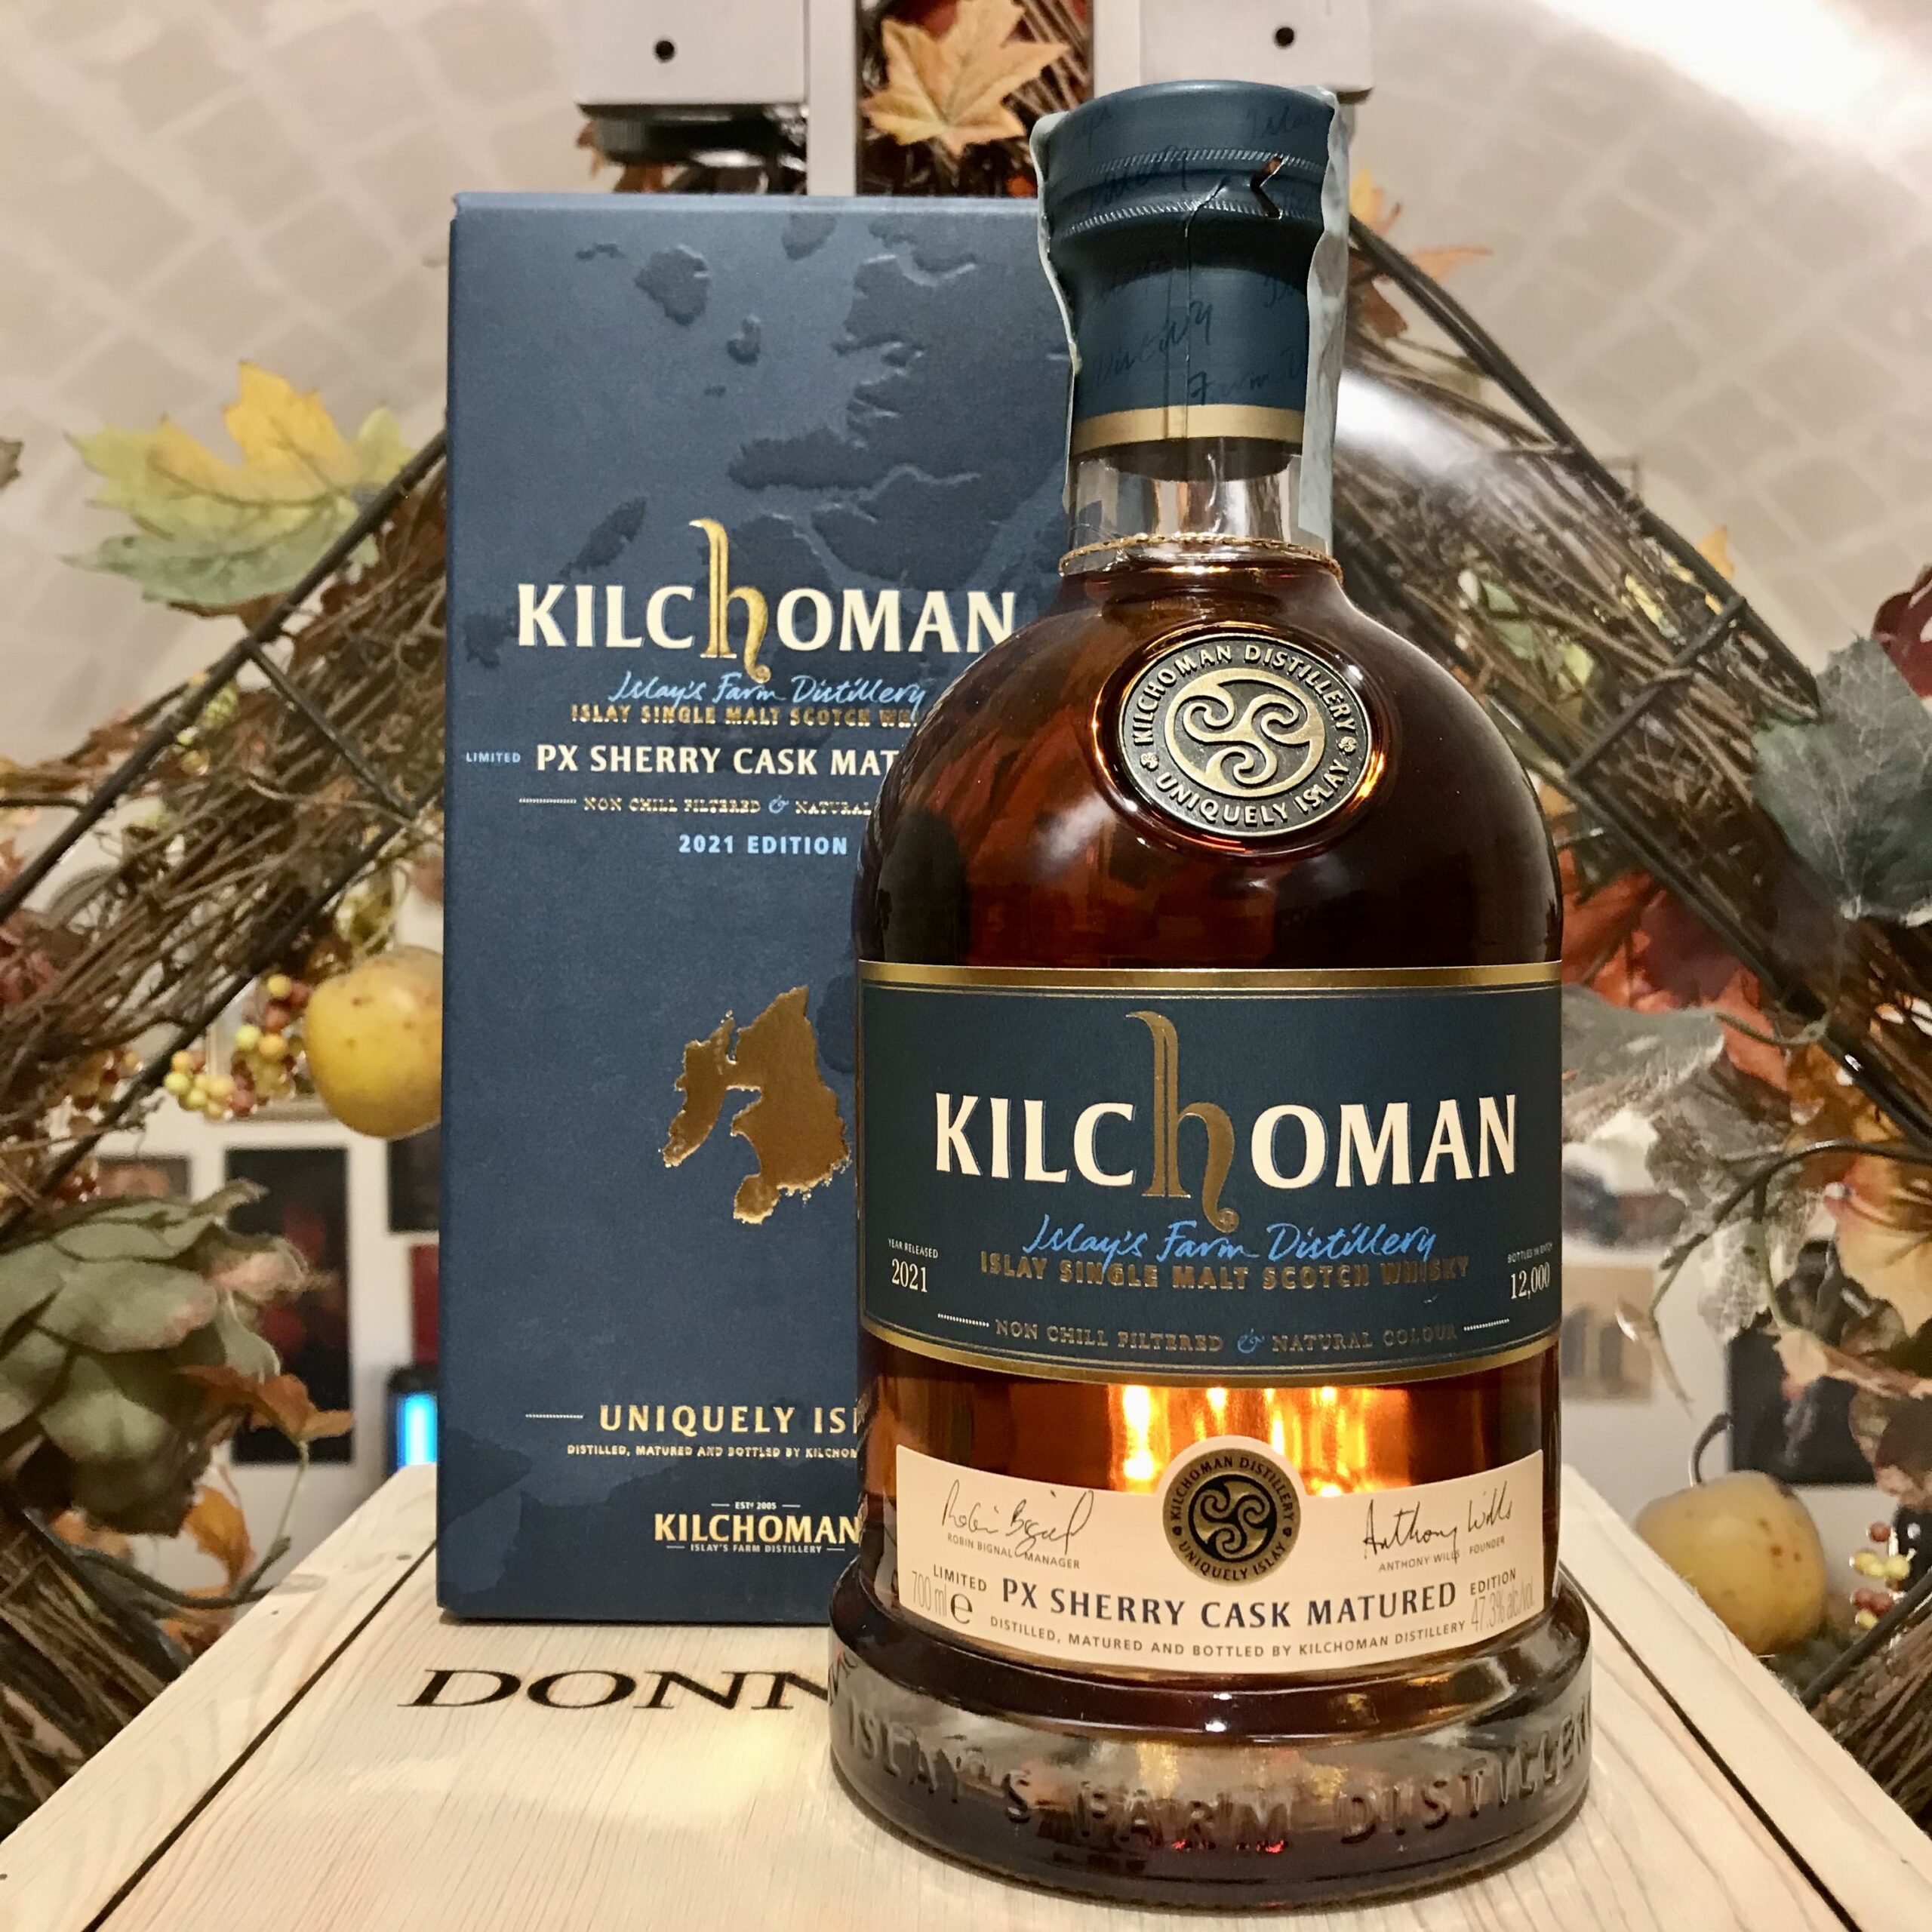 Kilchoman Islay Single Malt Scotch Whisky PX Sherry Cask Matured 2021